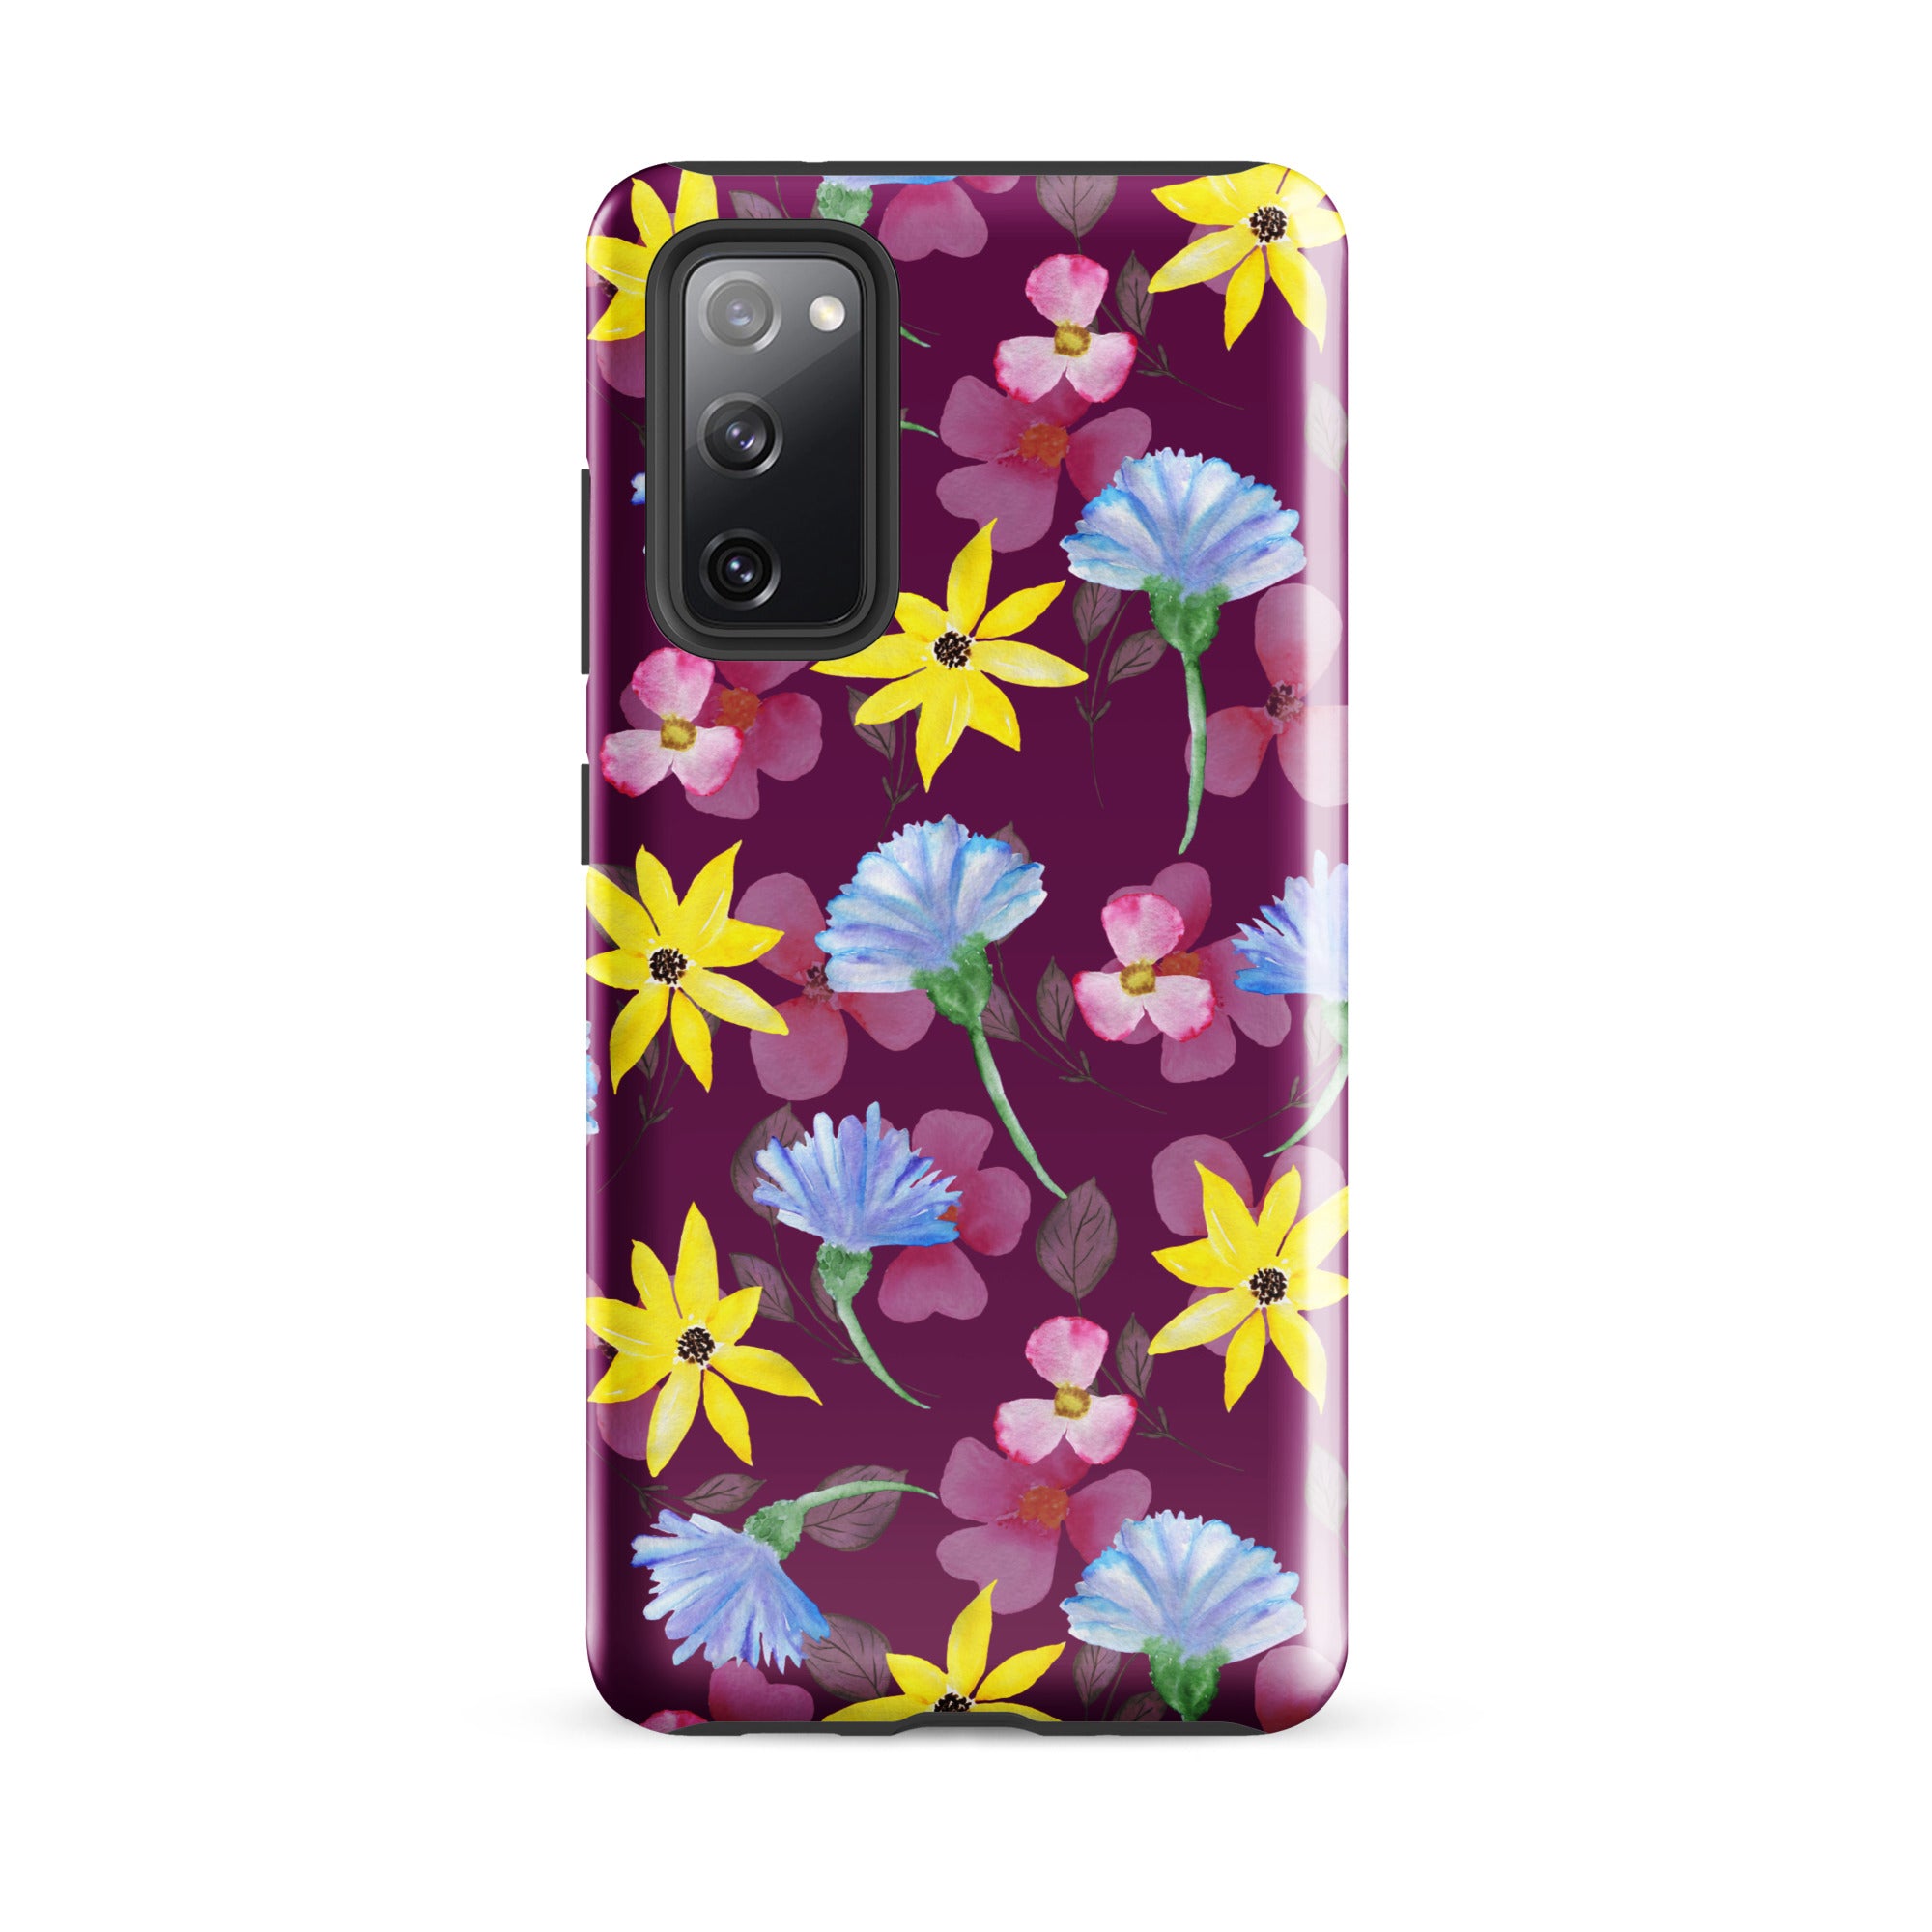 Tough case for Samsung®- Floral